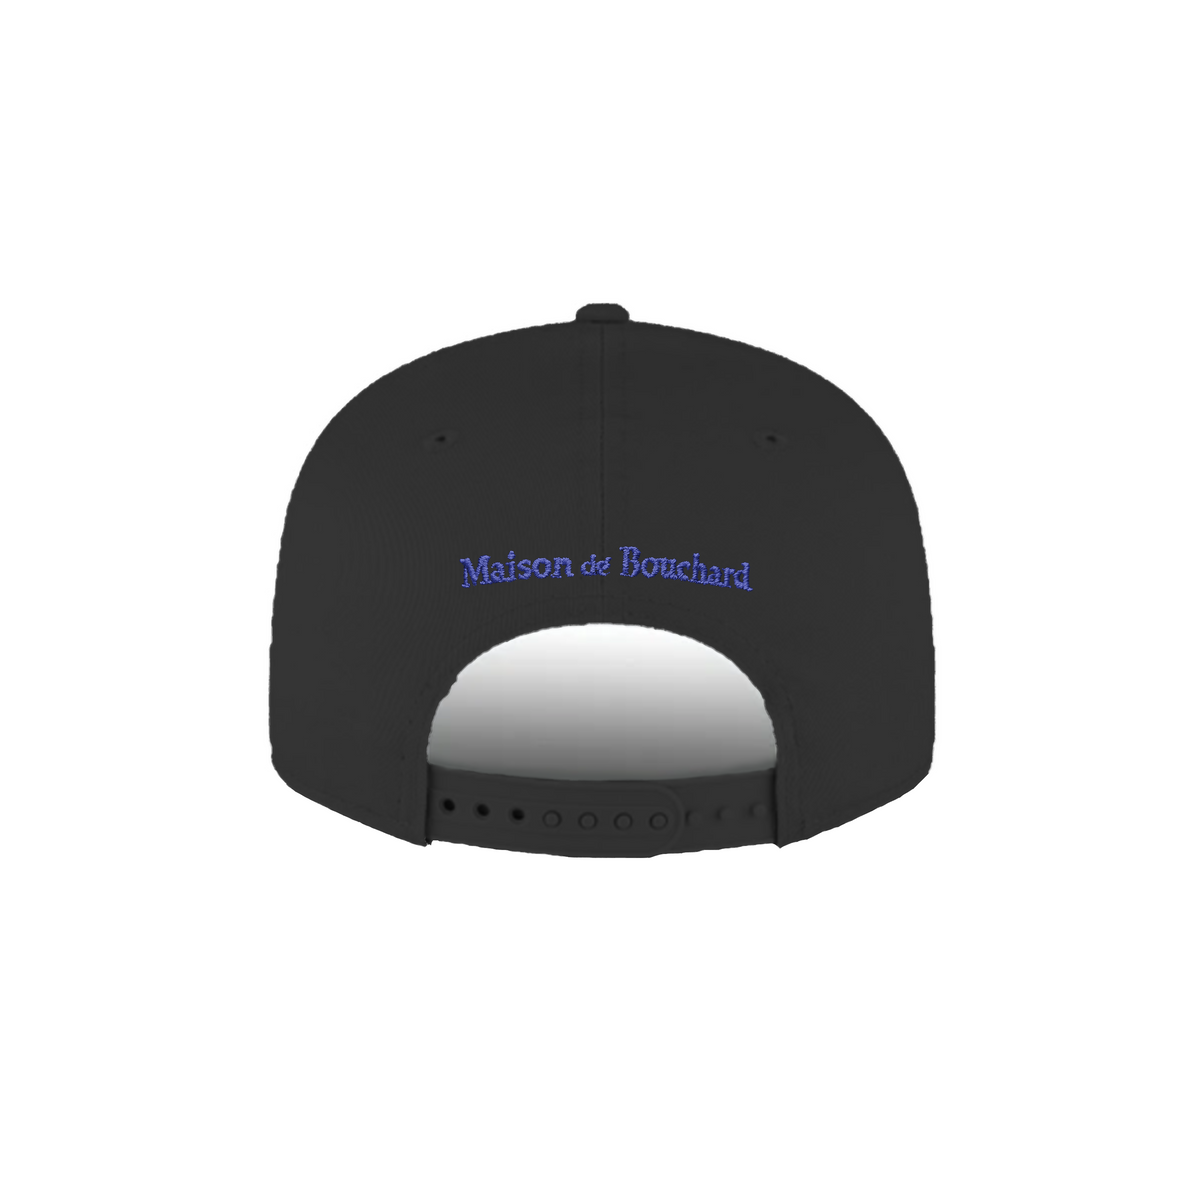 MDB Brand x New Era 9Fifty Snapback Embroidered Baseball Cap - Black w/ Basic Color